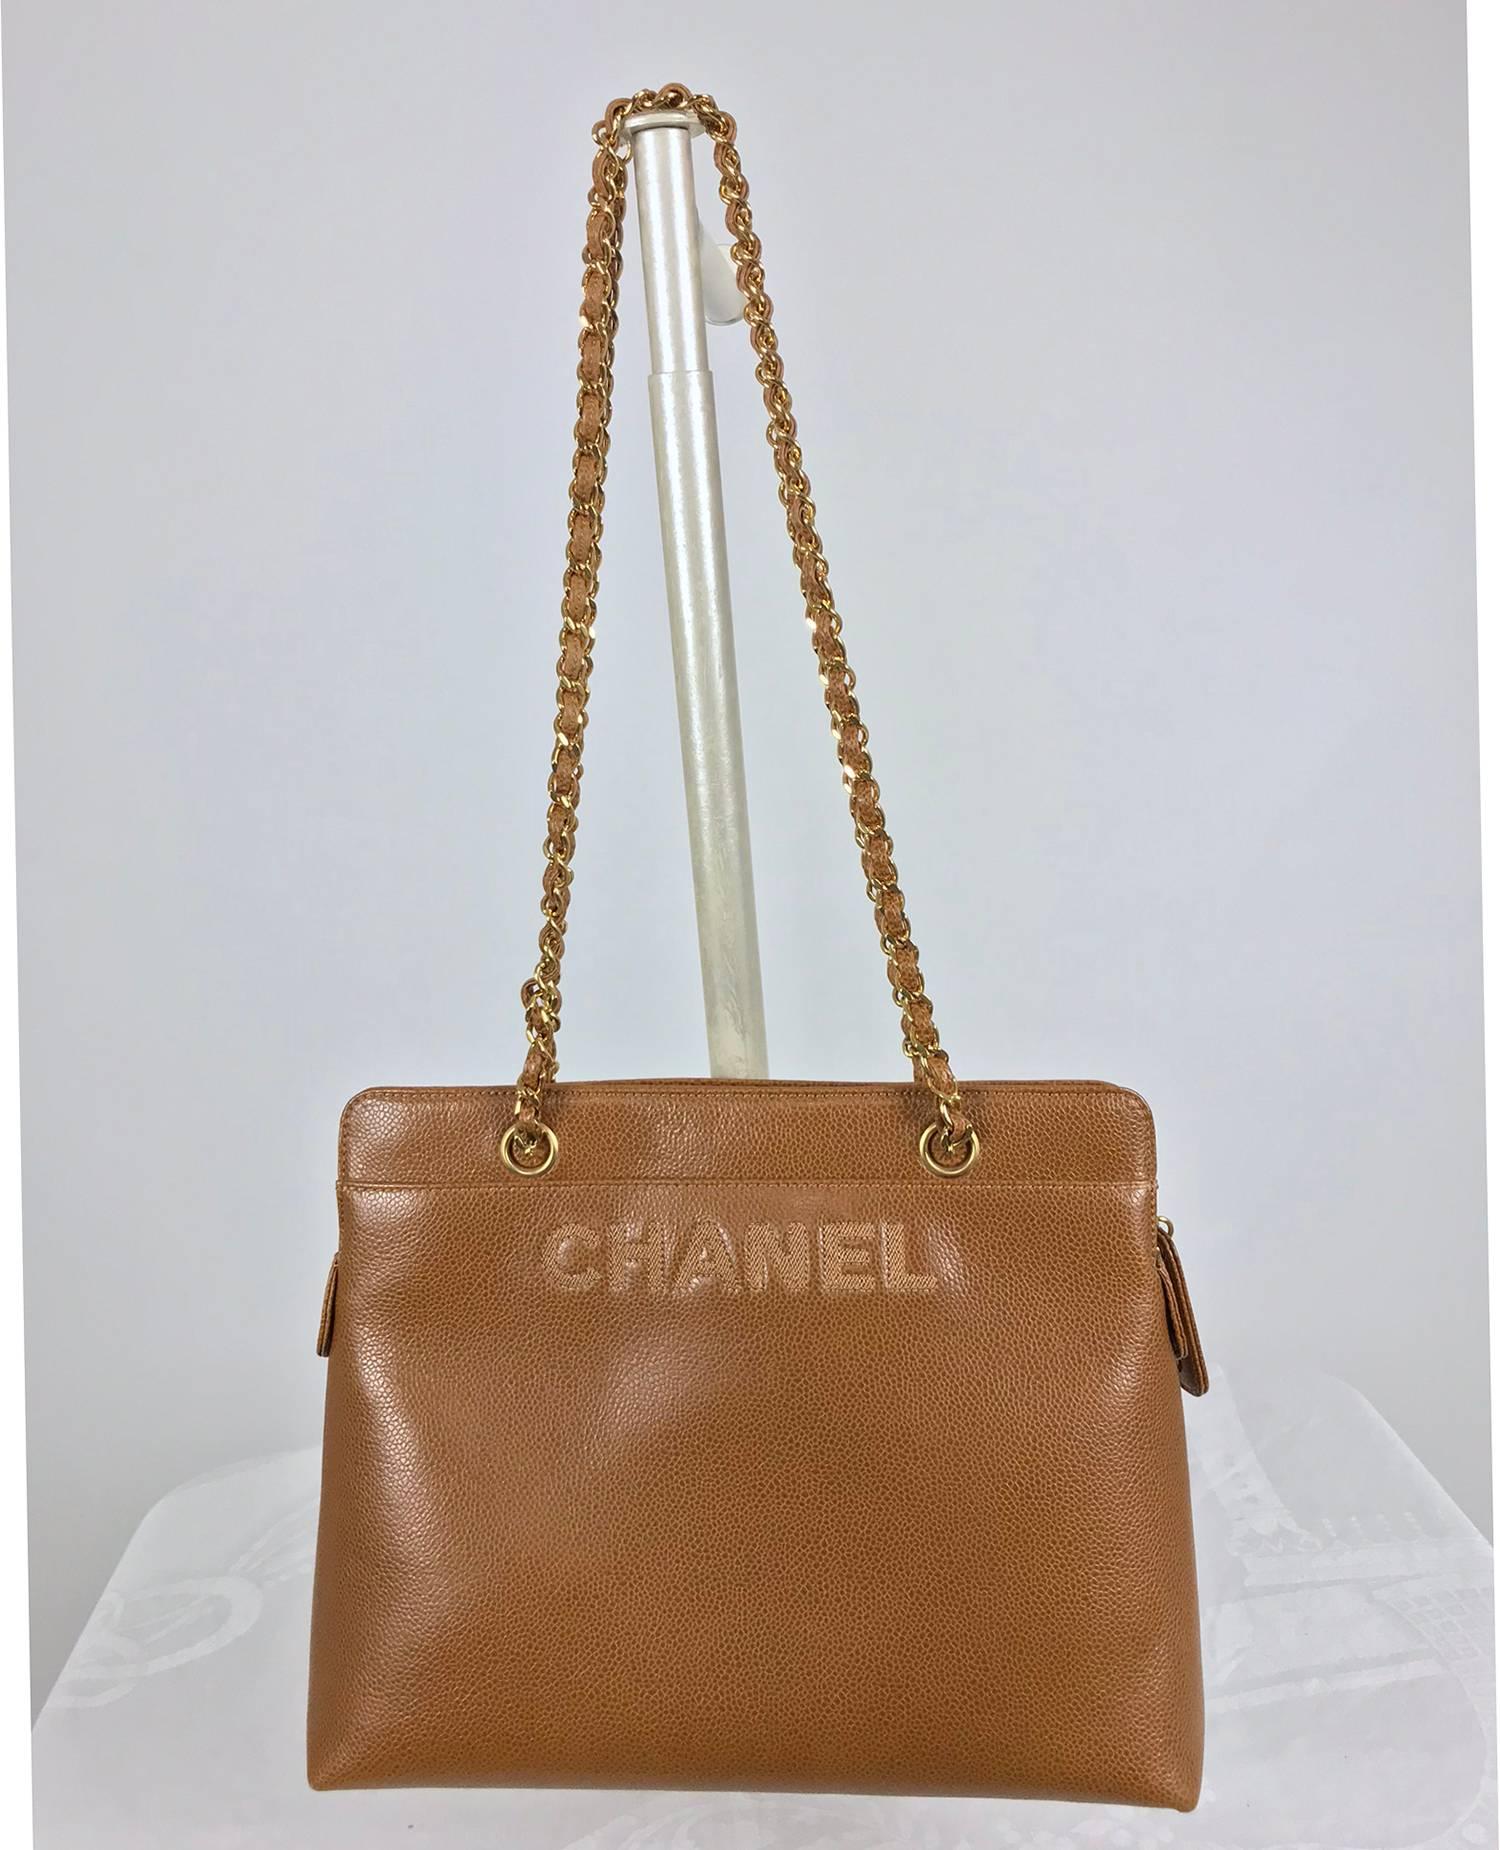 Brown Chanel caramel pebble leather chain strap shoulder bag unused